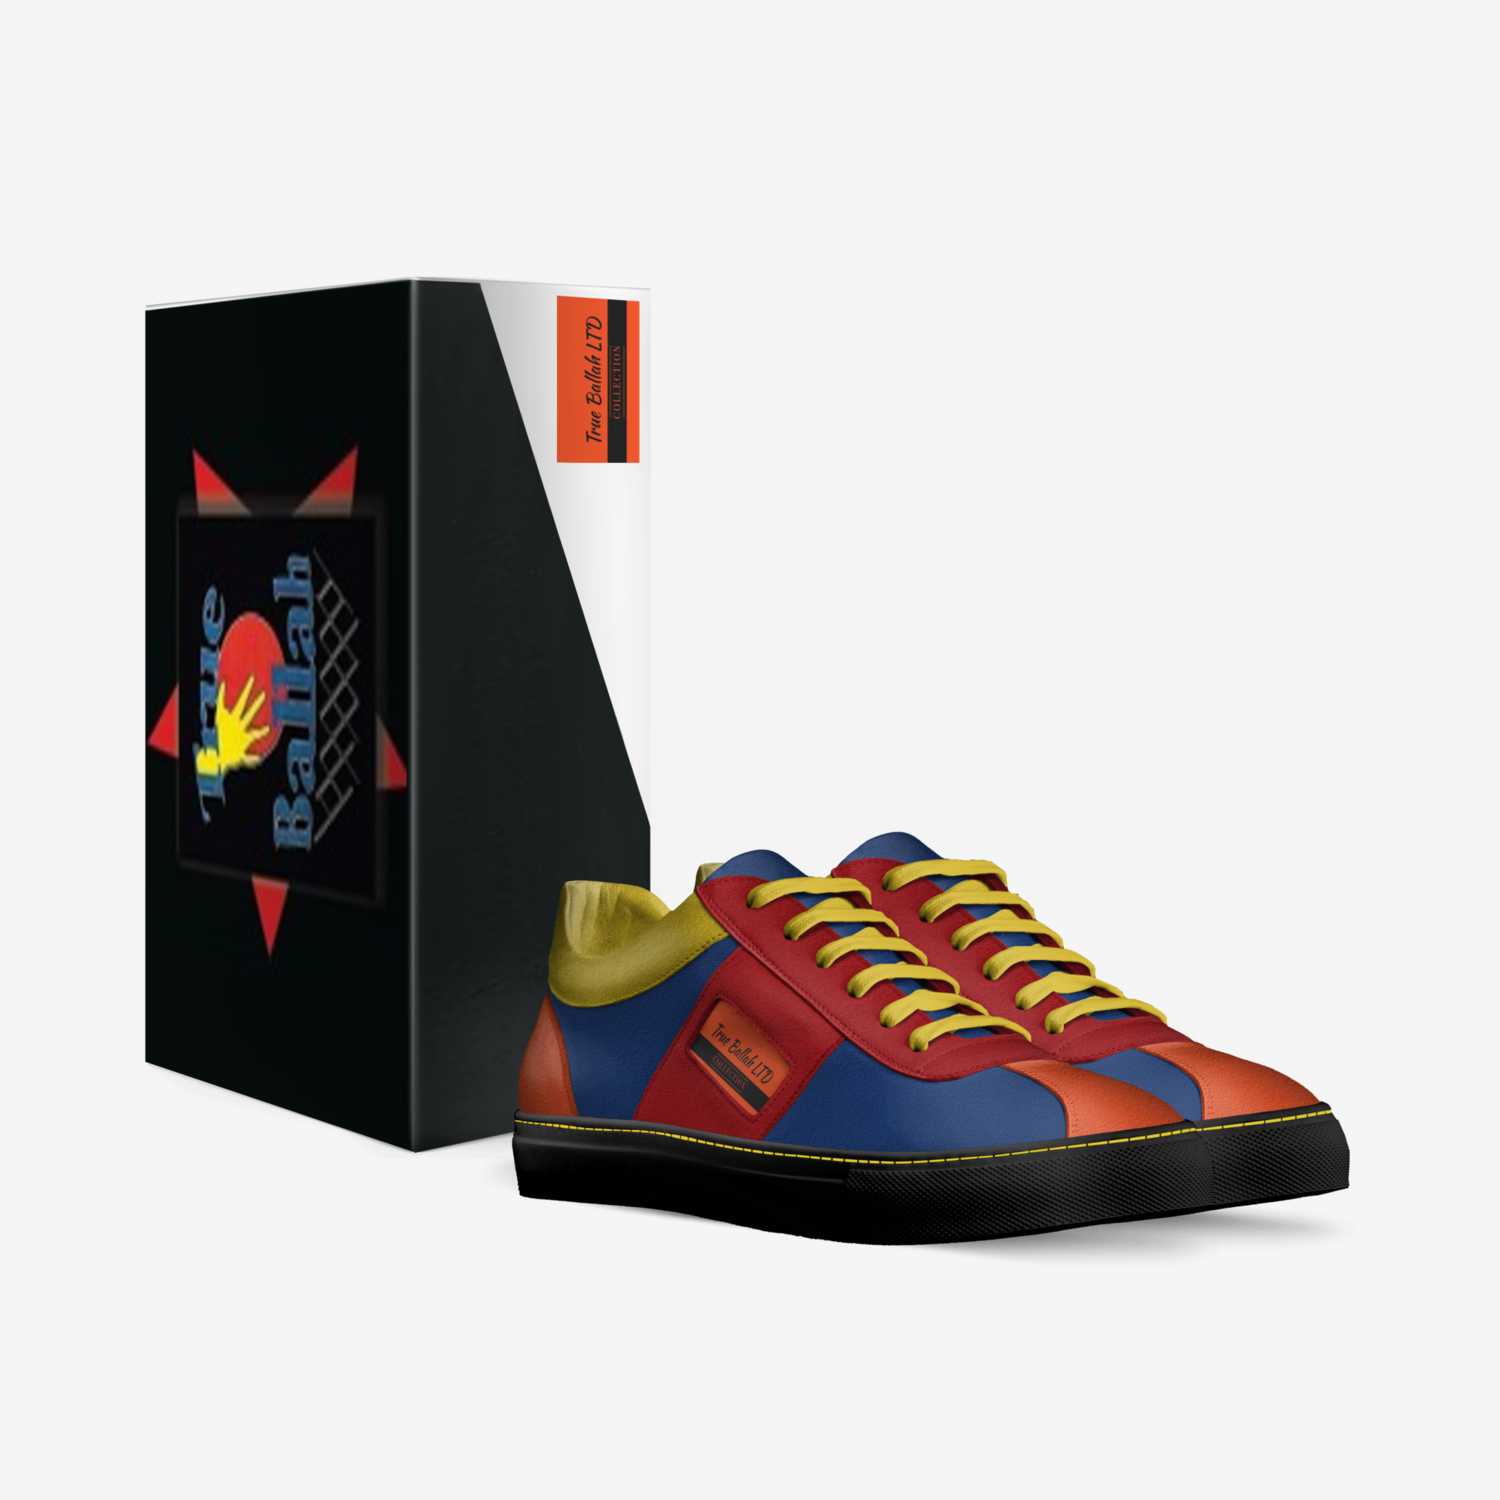 True Ballah LTD custom made in Italy shoes by Cha’von G | Box view